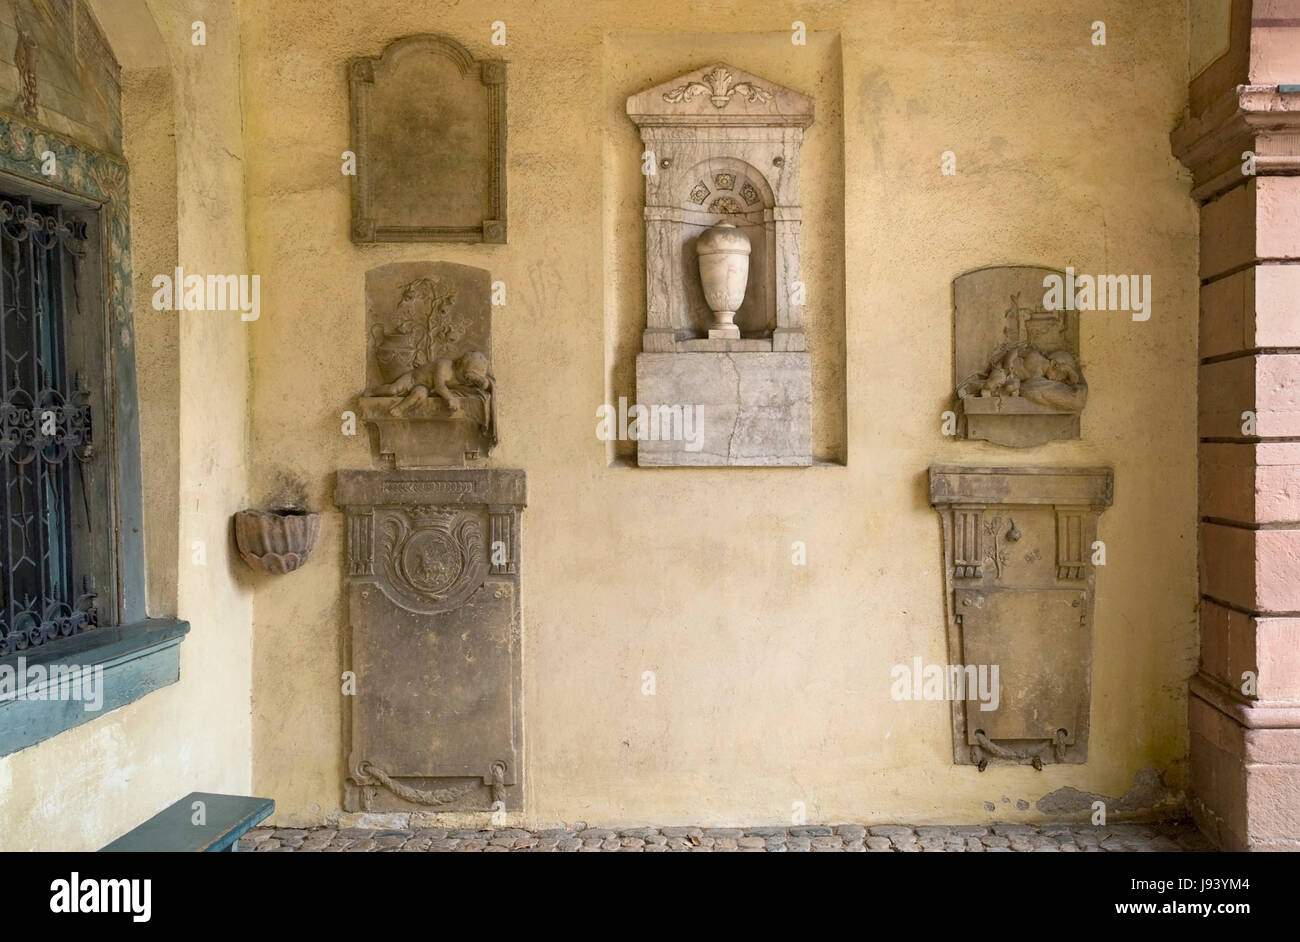 cemetery, historical, story, religion, stone, window, porthole, dormer window, Stock Photo